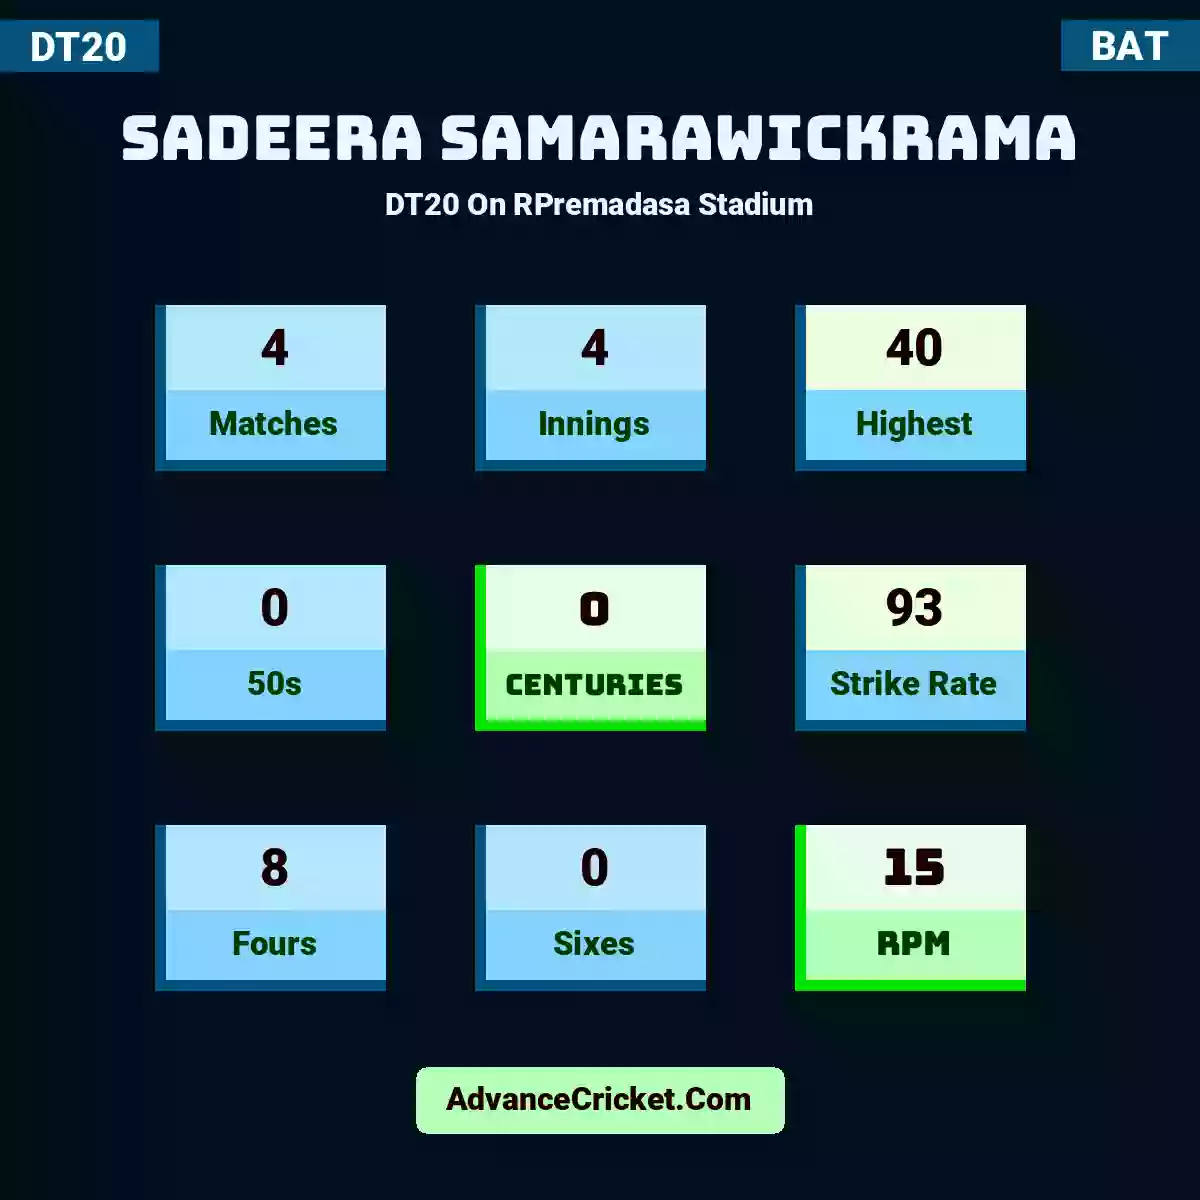 Sadeera Samarawickrama DT20  On RPremadasa Stadium, Sadeera Samarawickrama played 4 matches, scored 40 runs as highest, 0 half-centuries, and 0 centuries, with a strike rate of 93. S.Samarawickrama hit 8 fours and 0 sixes, with an RPM of 15.